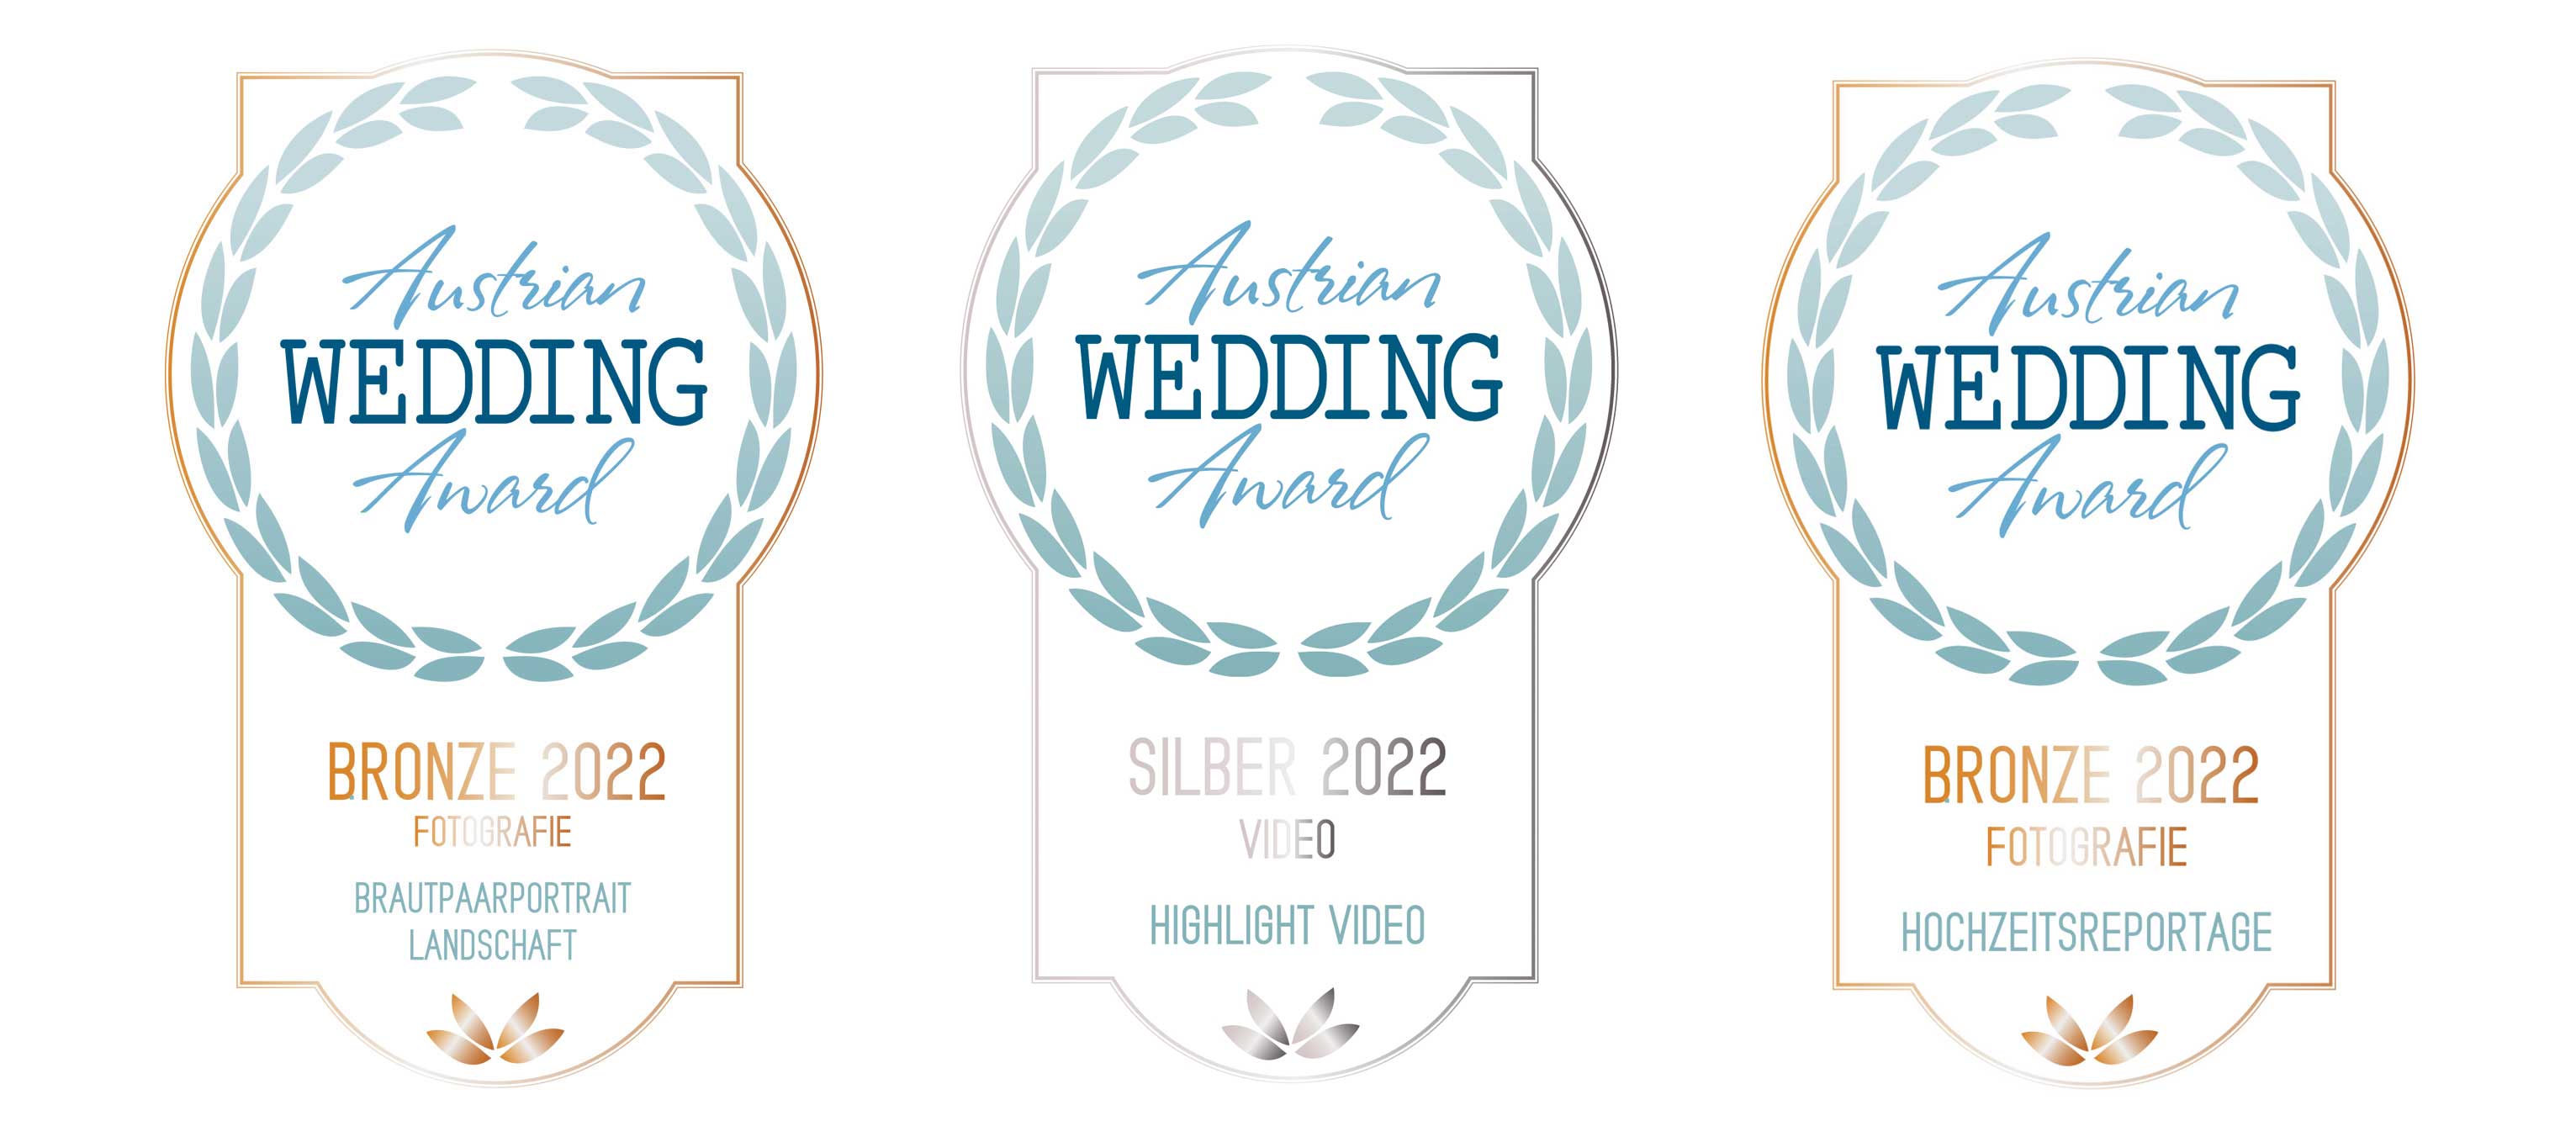 Austrian Wedding Award 2020 Gewinnerfoto